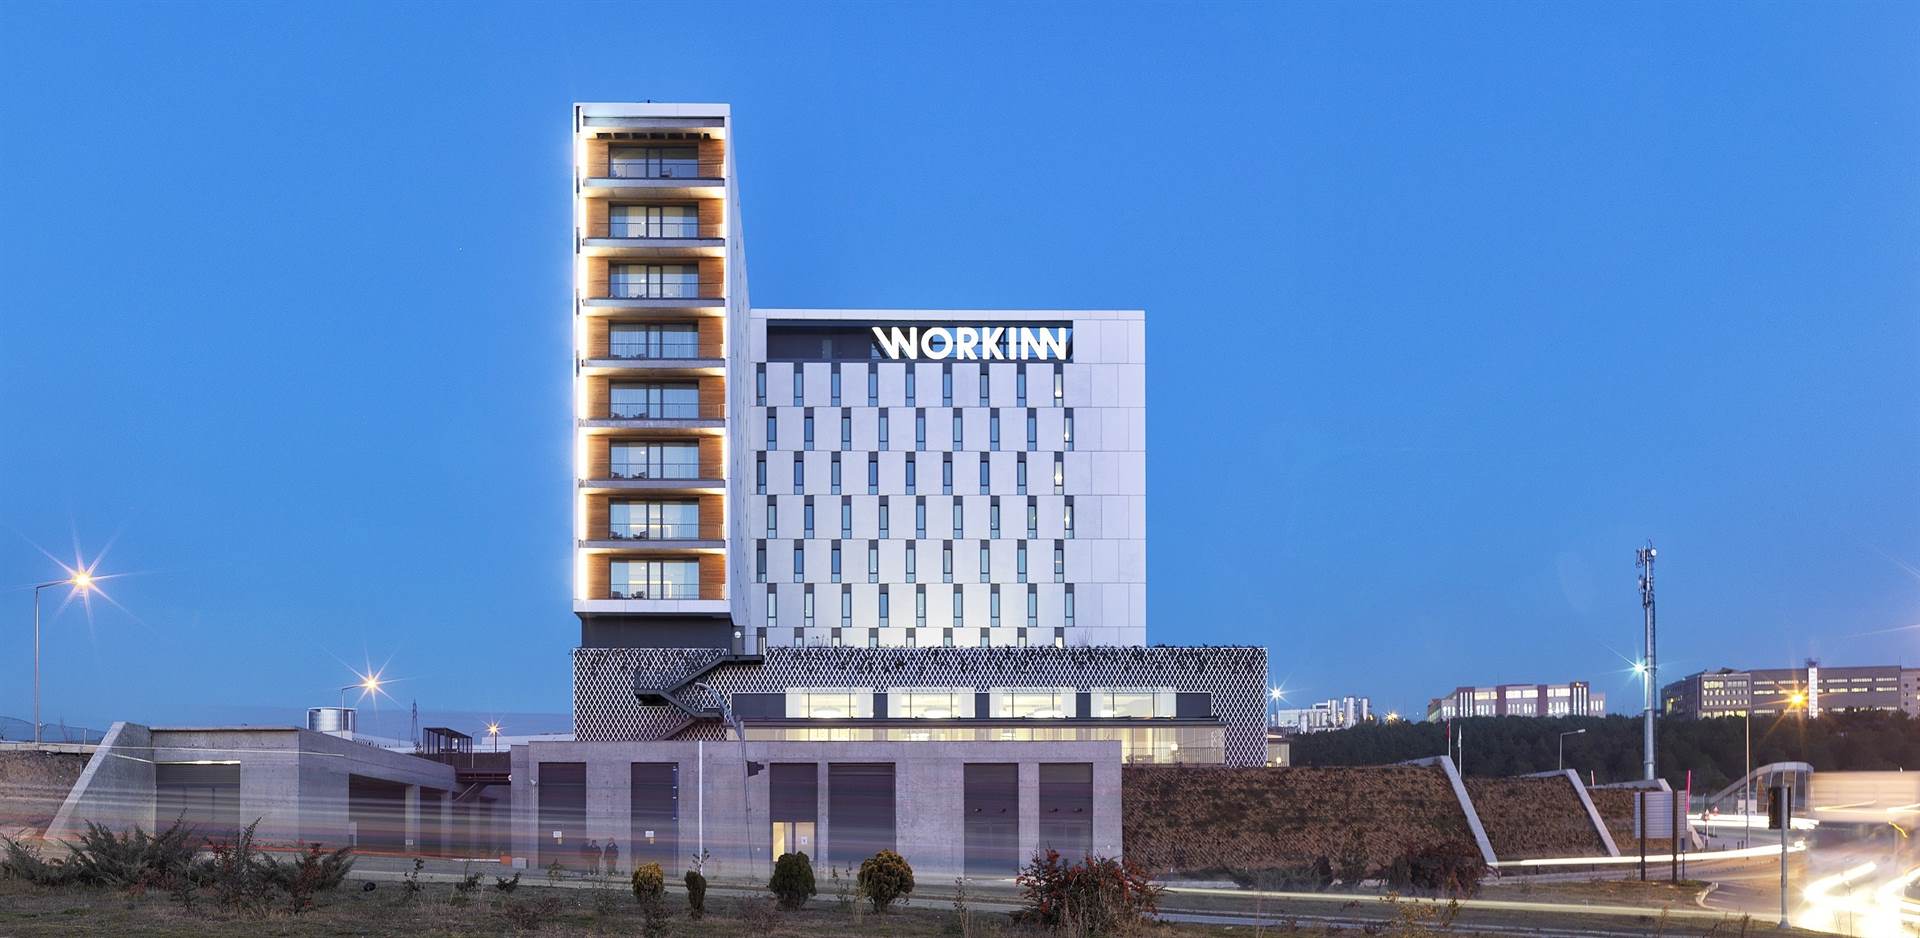 Work-Inn Hotel Project